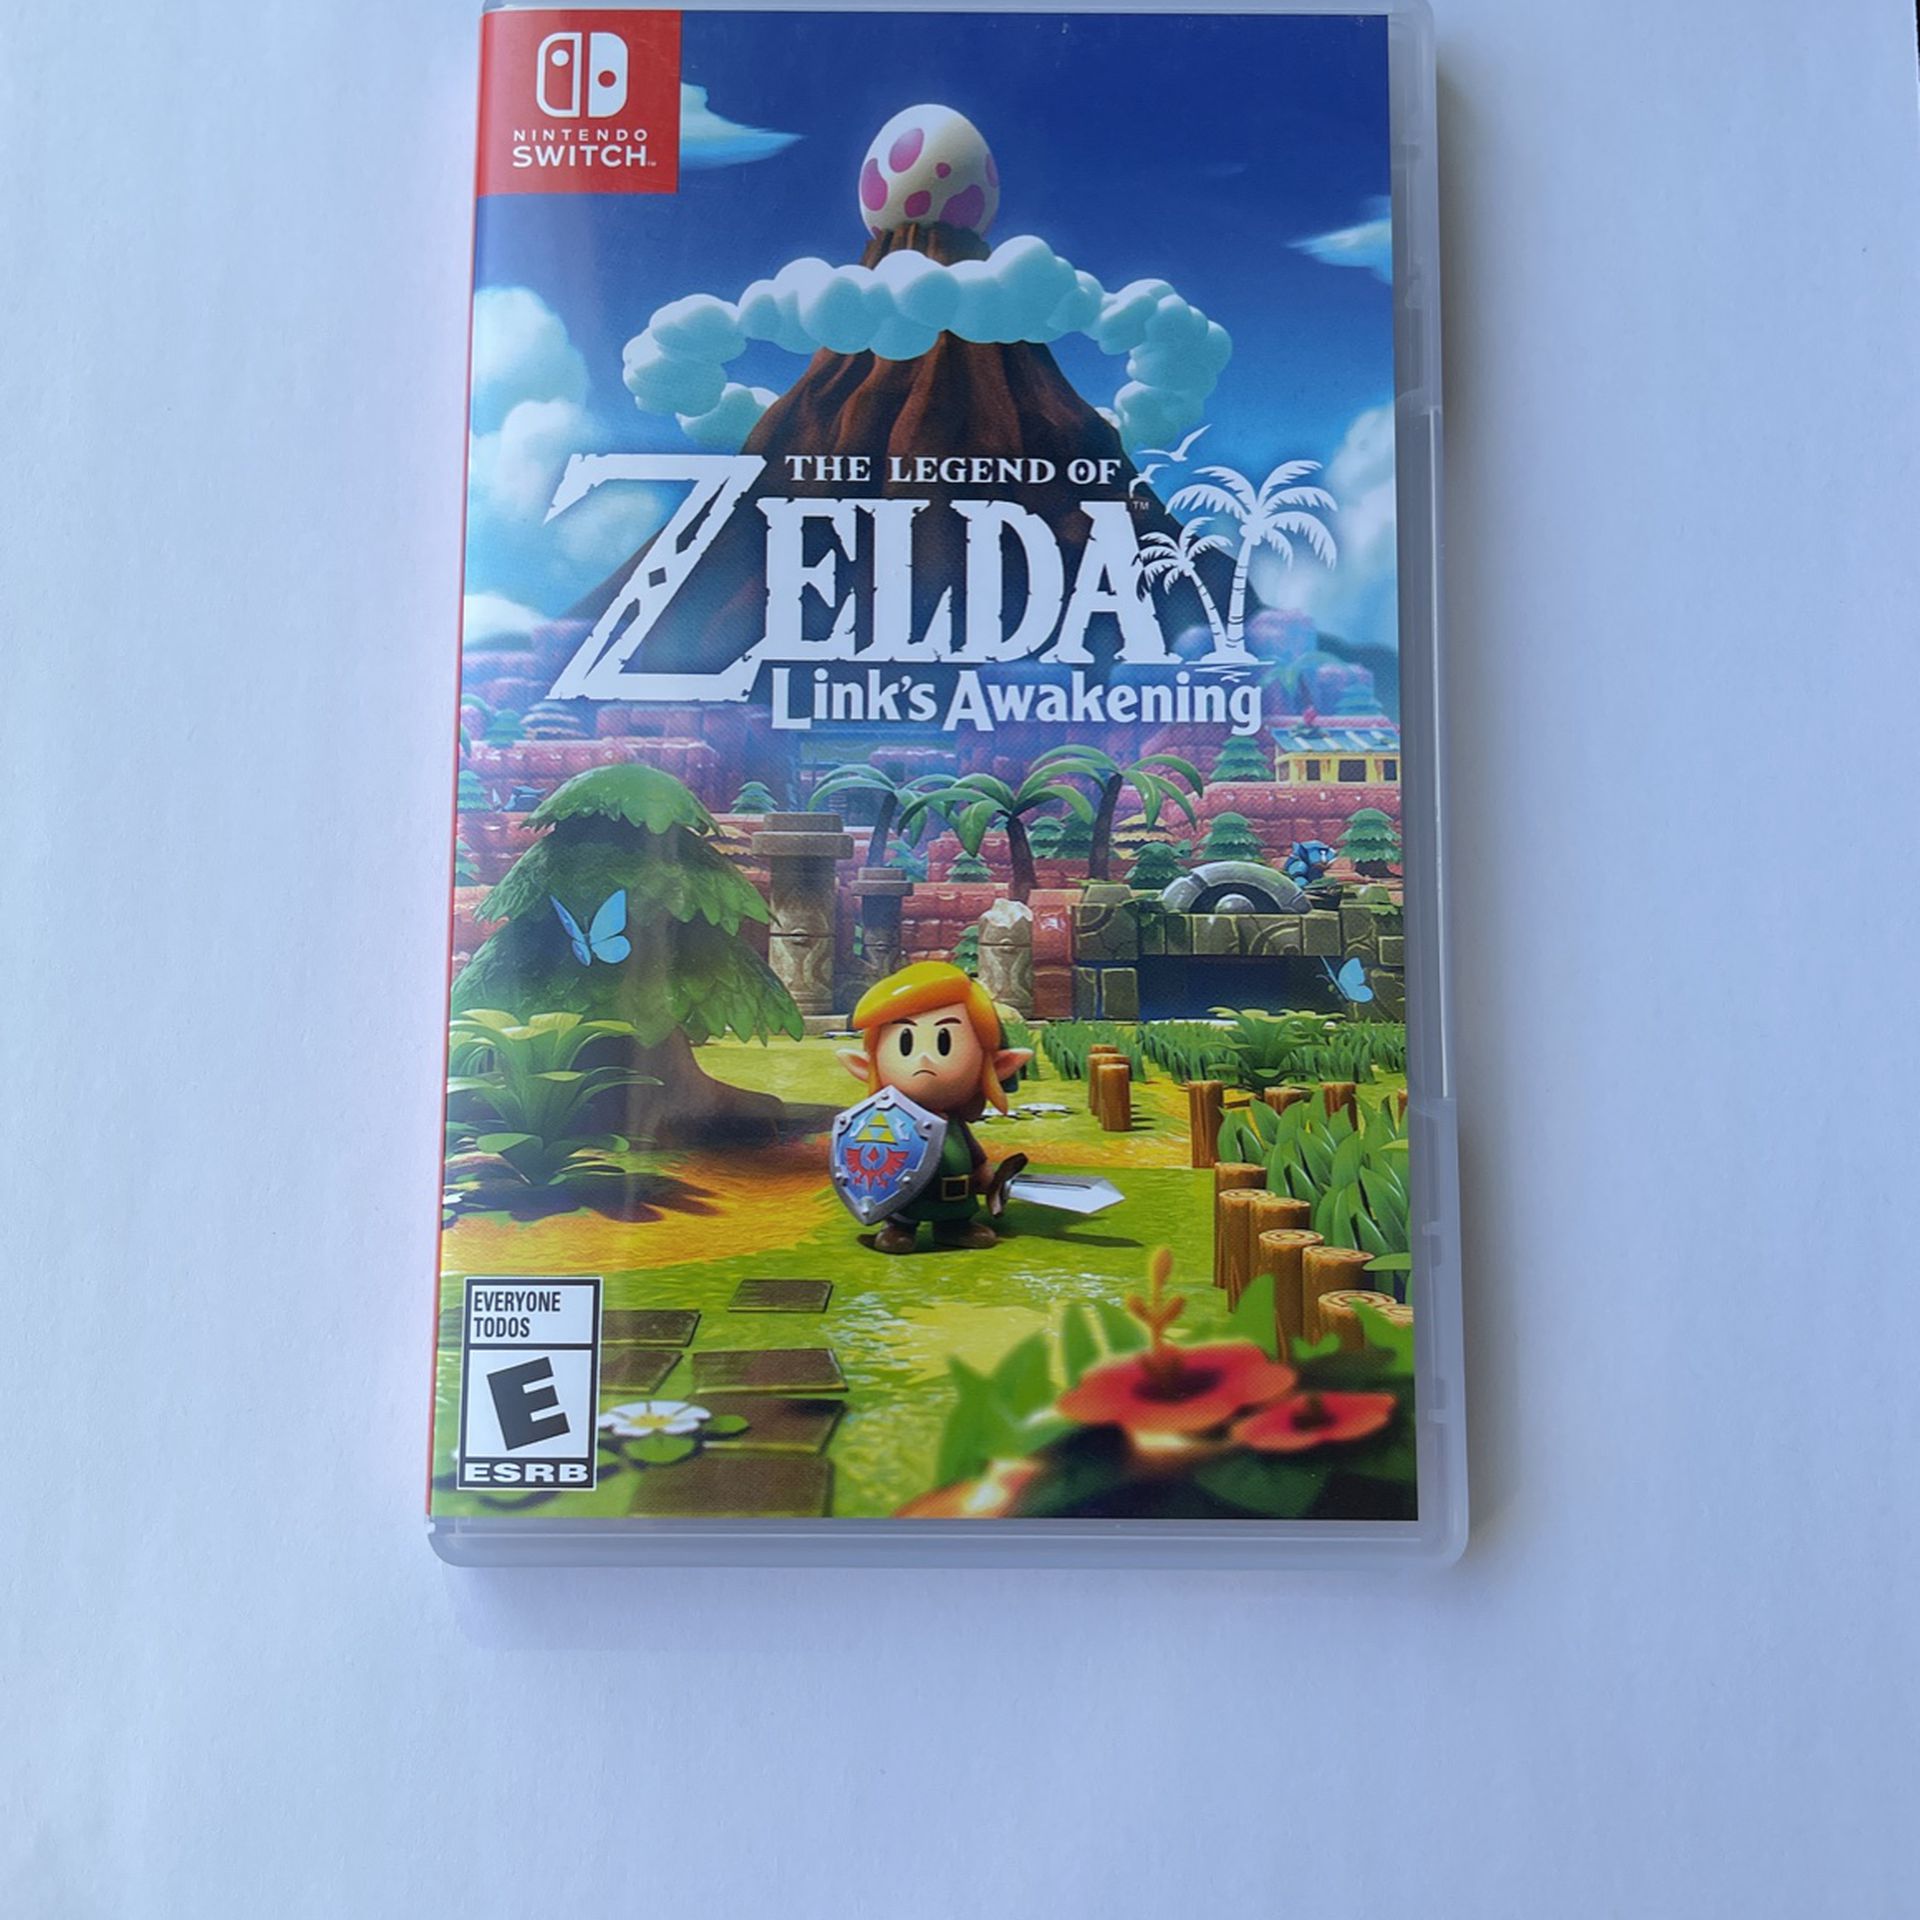 The Legend Of Zelda Link’s Awakening - Nintendo Switch Game - Like New!